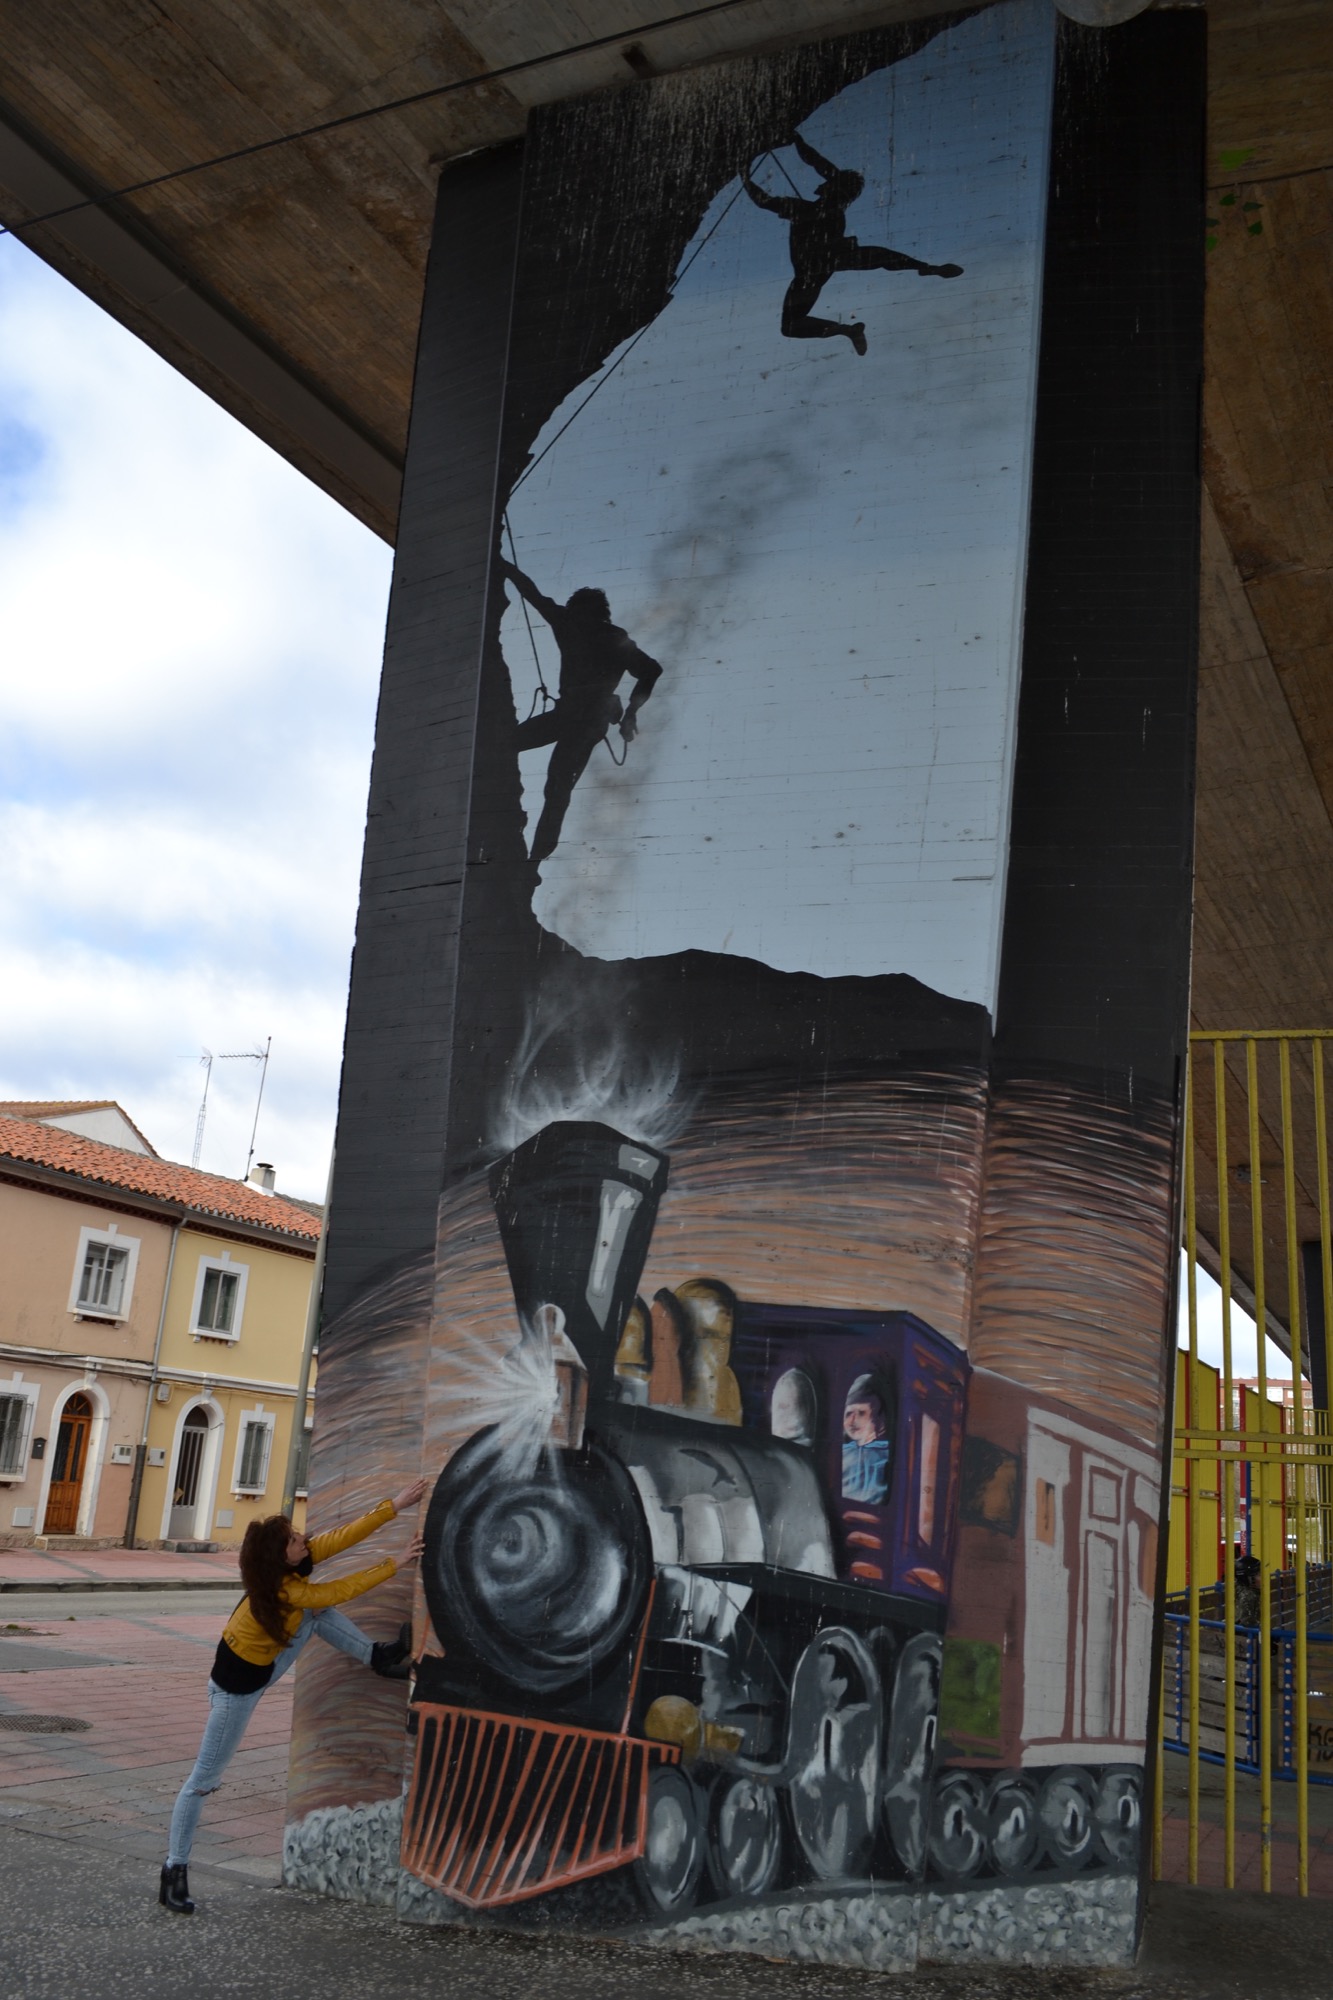 Graffiti 774 La Locomotora captured by ankarkzoo in Burgos Spain